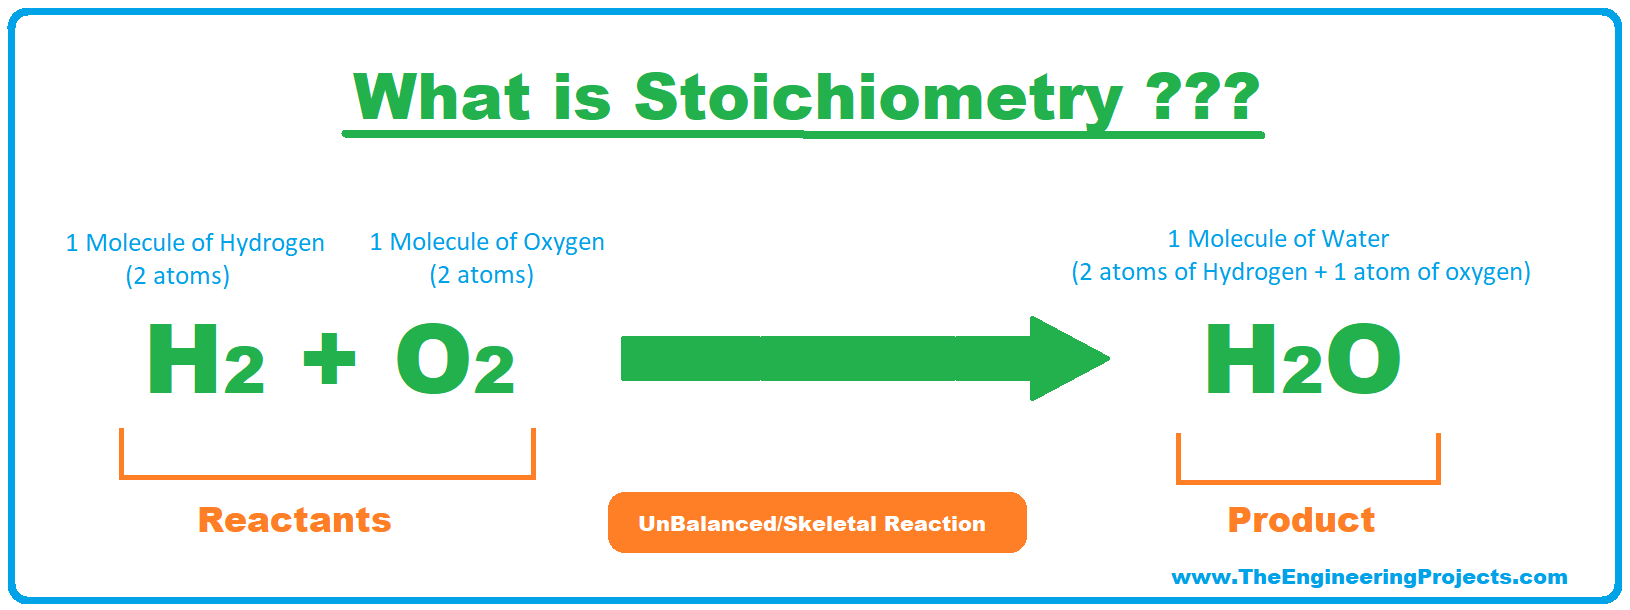 Stoichiometry, what is Stoichiometry, Stoichiometry laws, Stoichiometry rules, Stoichiometry definition, Stoichiometry problems, Stoichiometry examples, Stoichiometry conversions, Stoichiometry calculations, unbalanced reaction, skeletal reaction